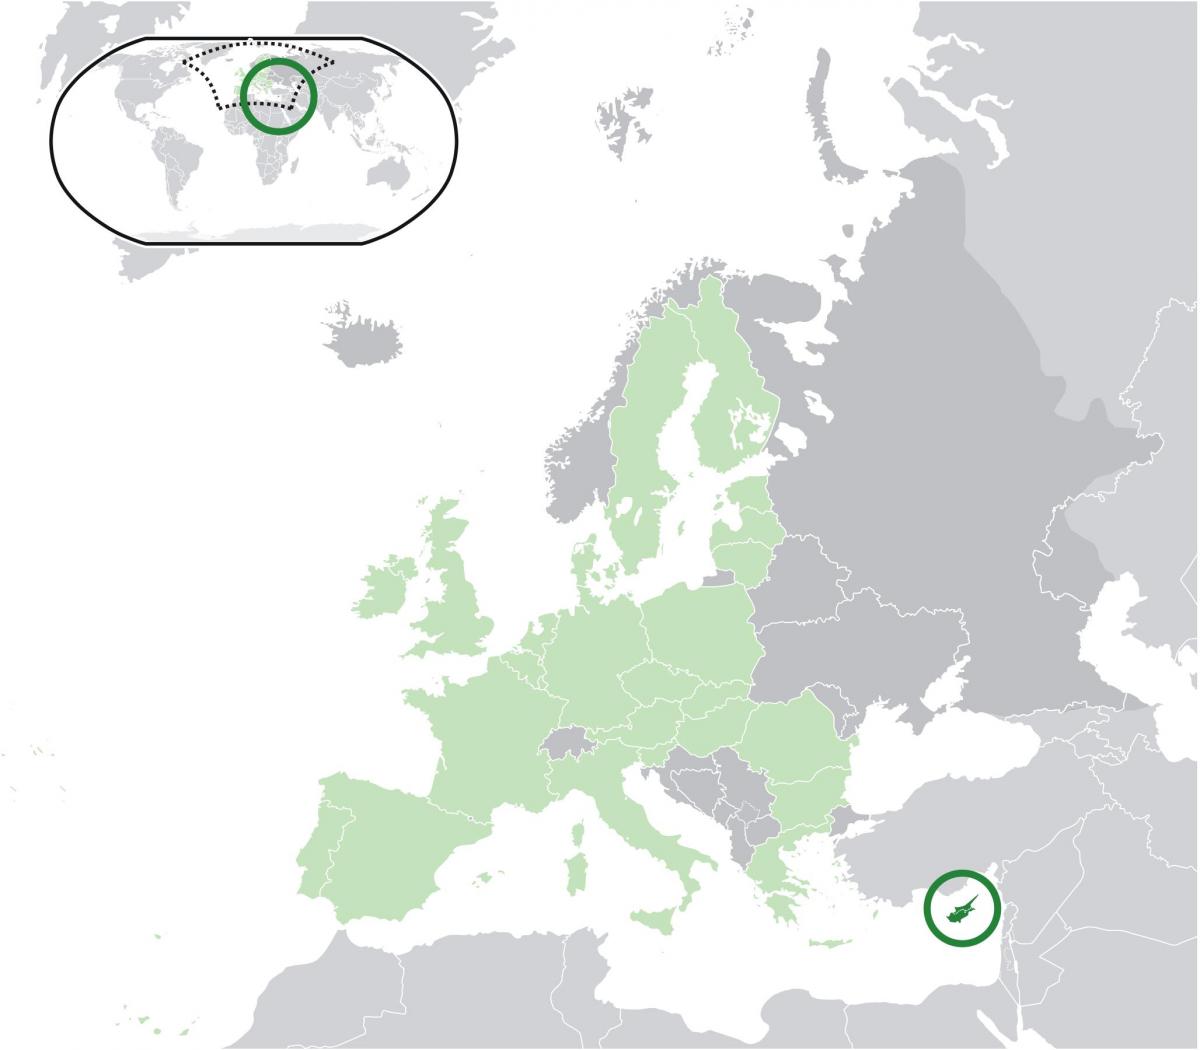 mapa de europa mostrando Chipre